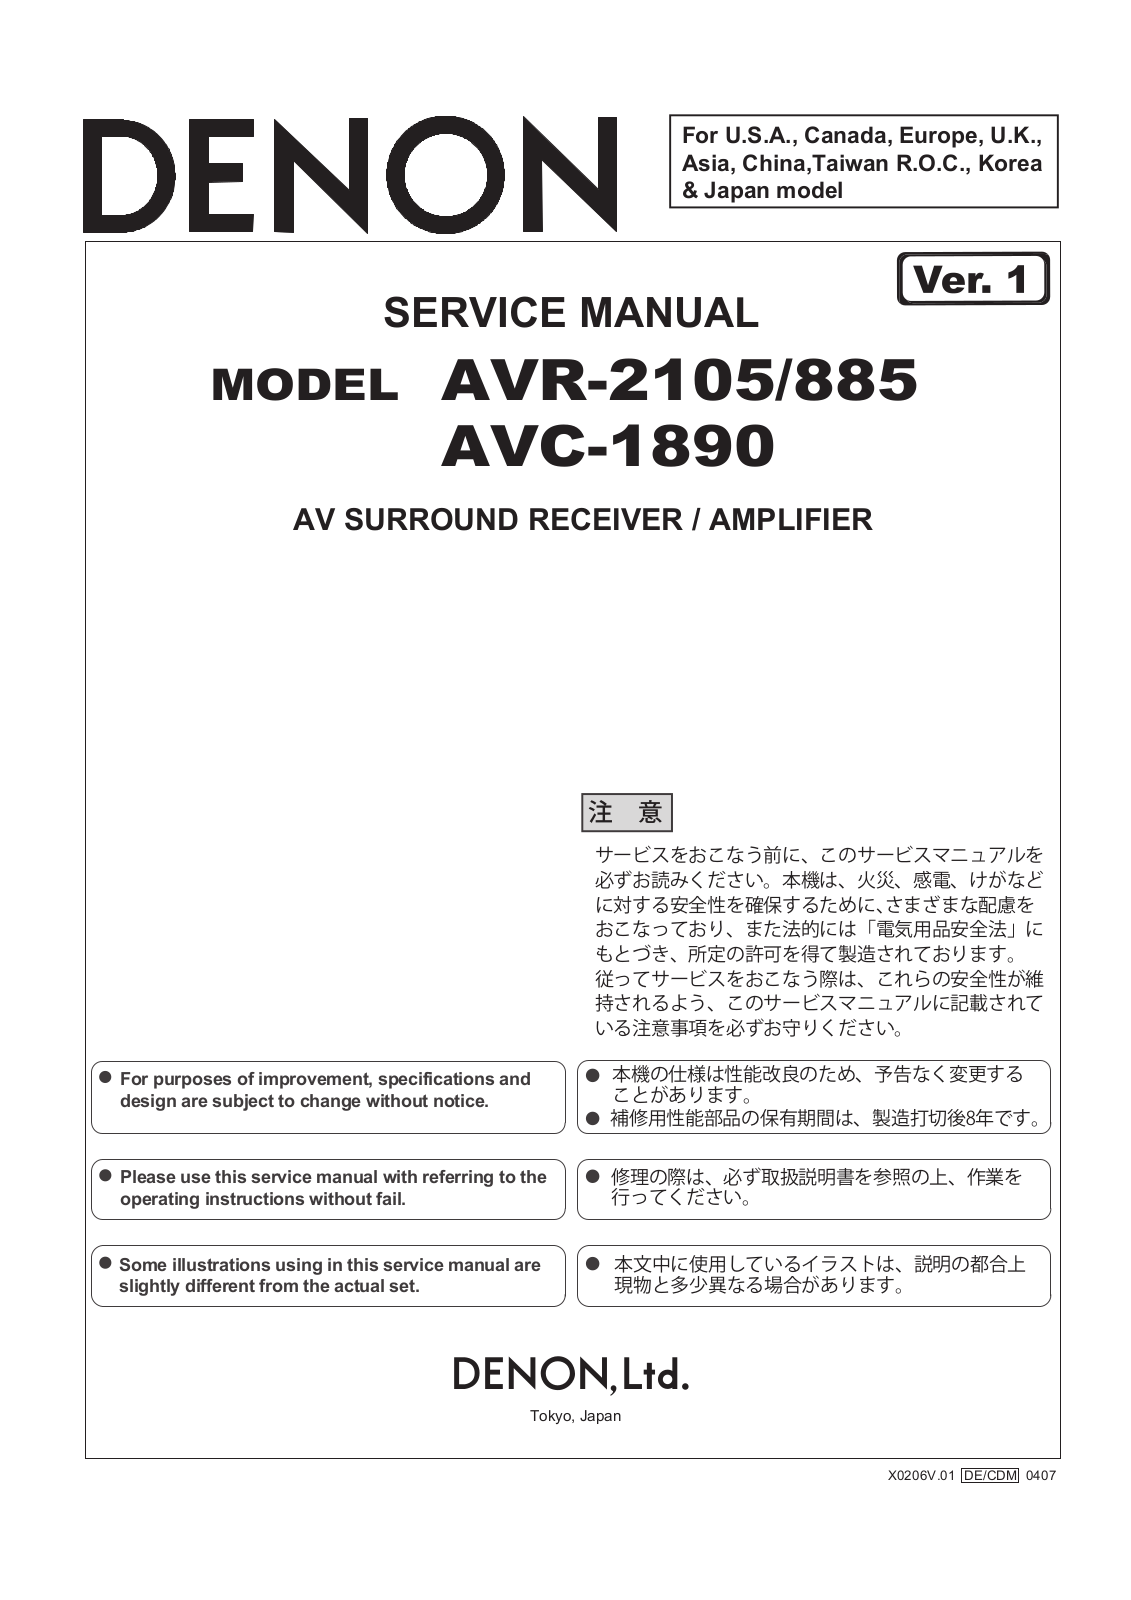 Denon AVC-1890 Service Manual